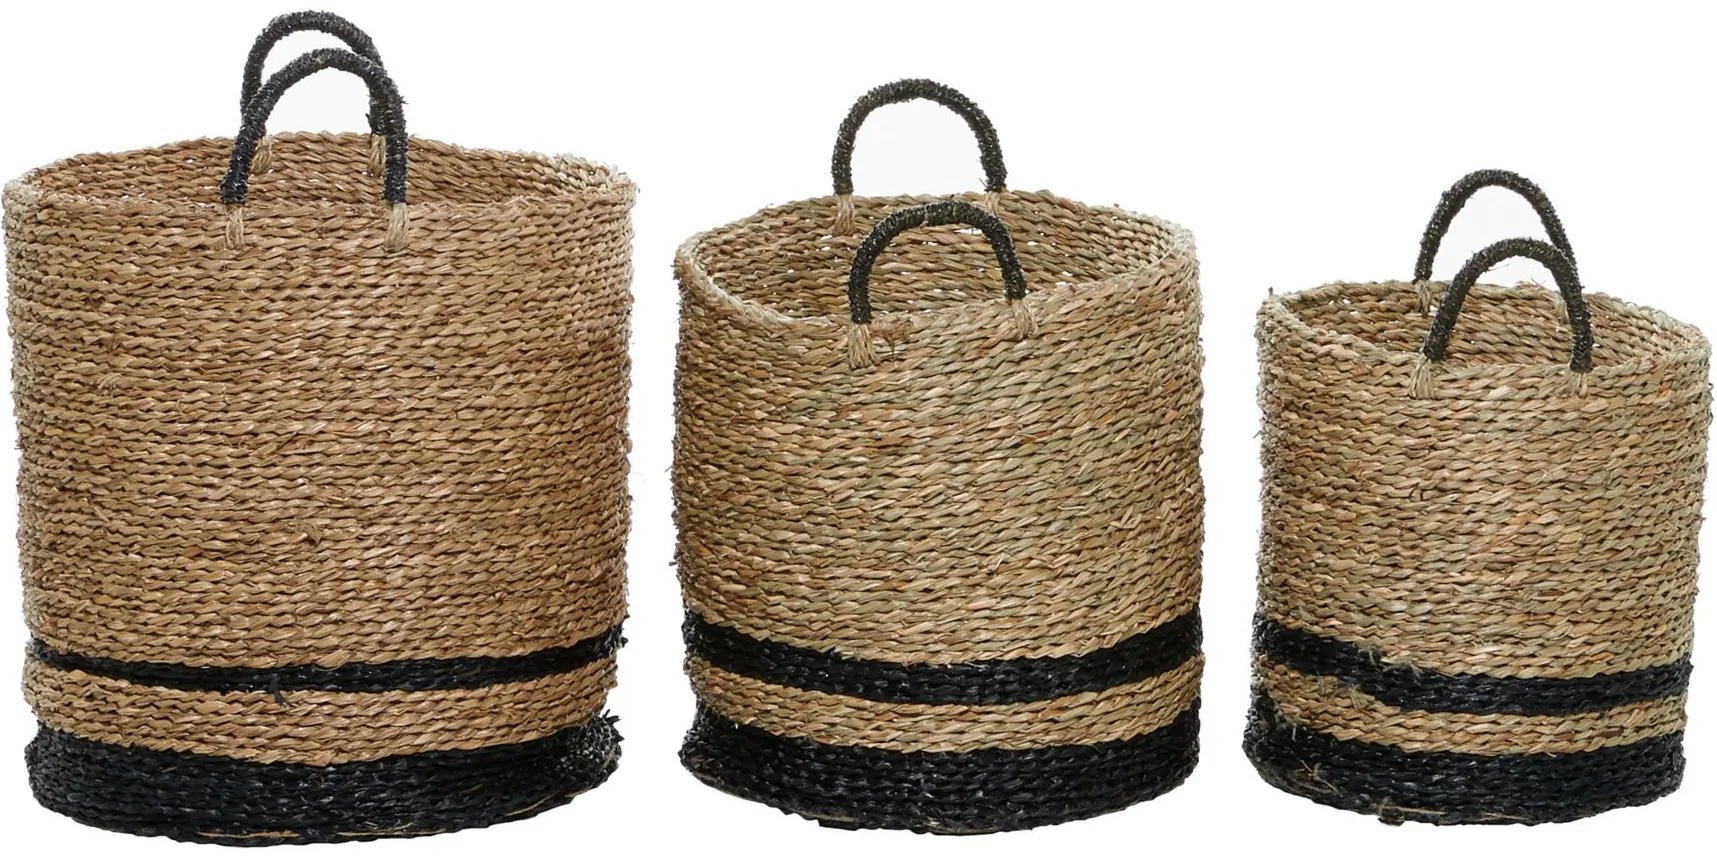 Ivy Collection Englewood Storage Baskets - Set of 3 in Black by UMA Enterprises